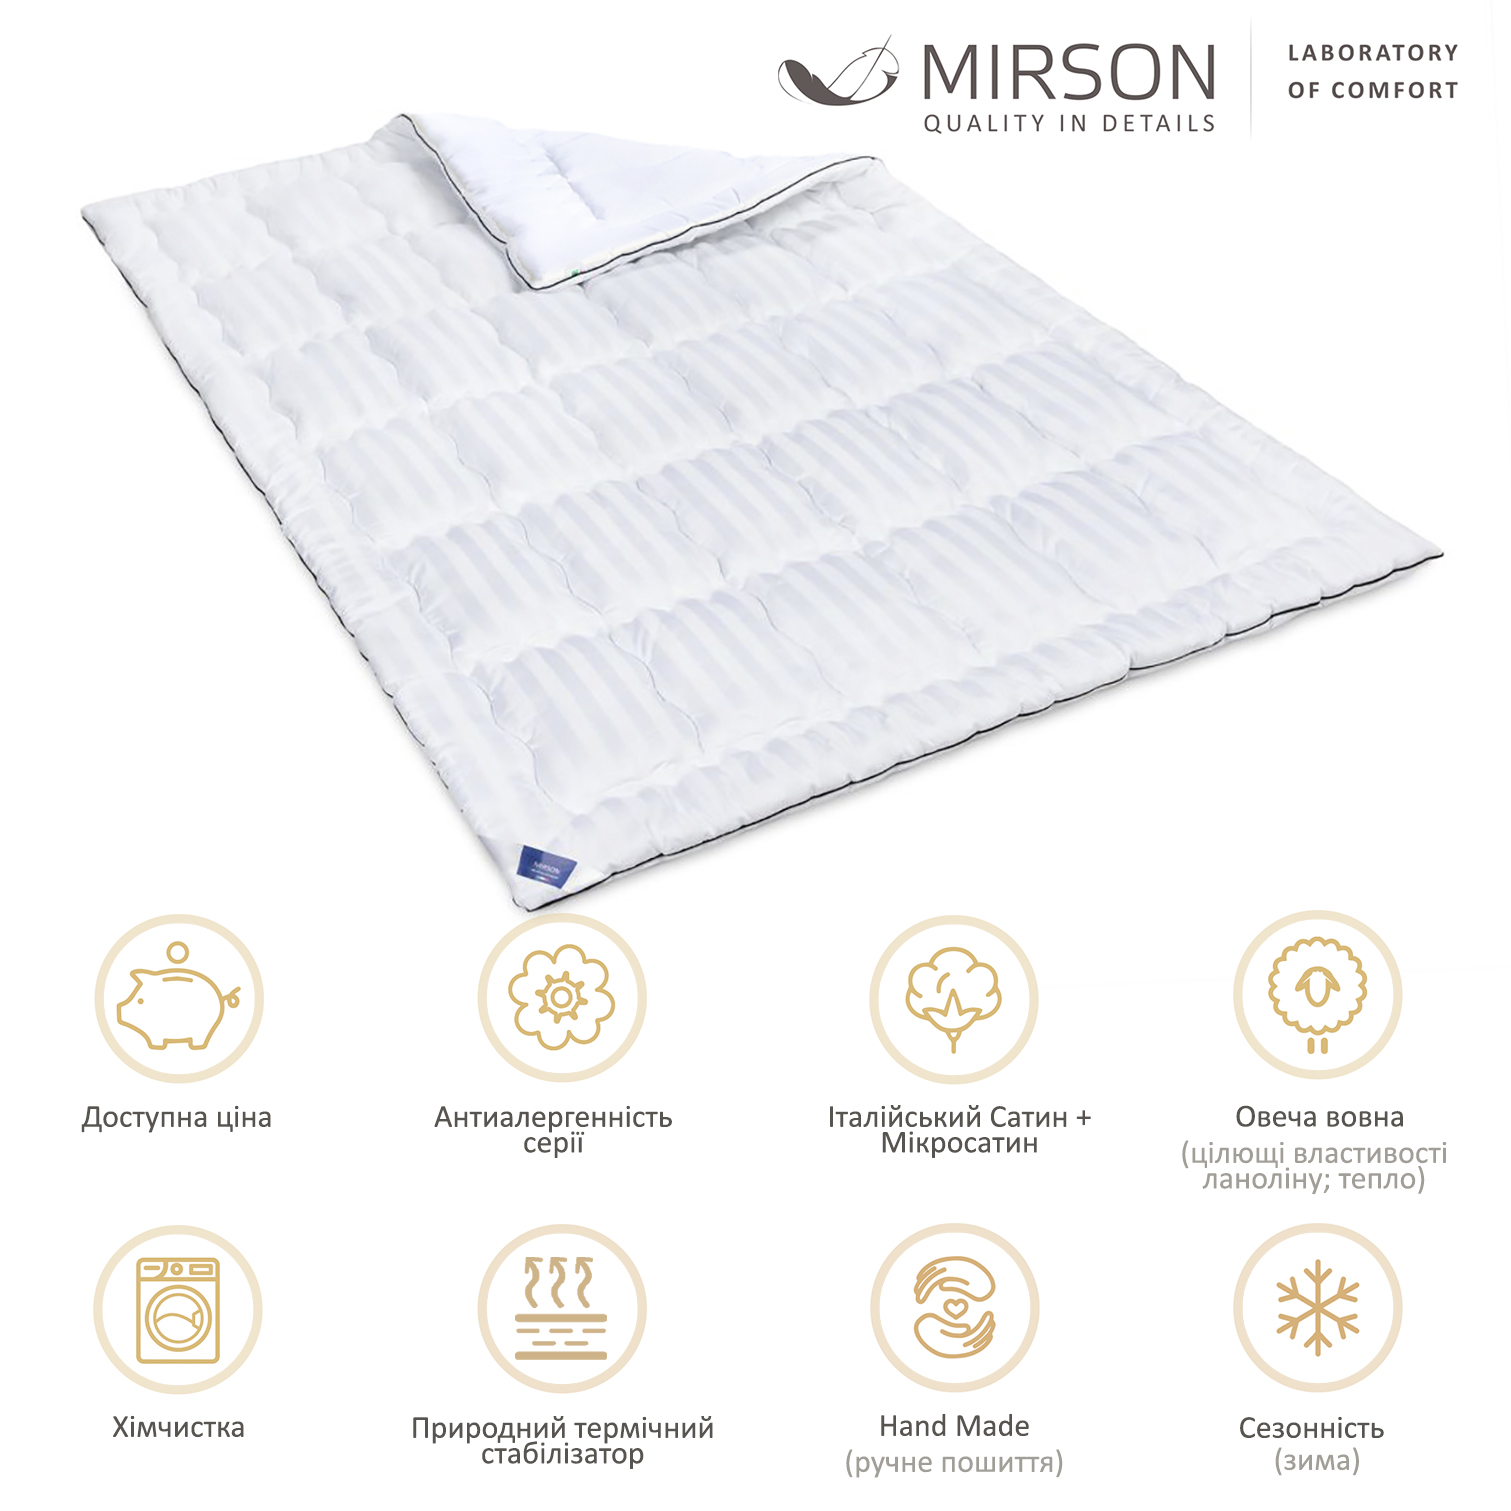 Одеяло шерстяное MirSon Royal Pearl Hand Made №1362, зимнее, 200x220 см, белое - фото 5